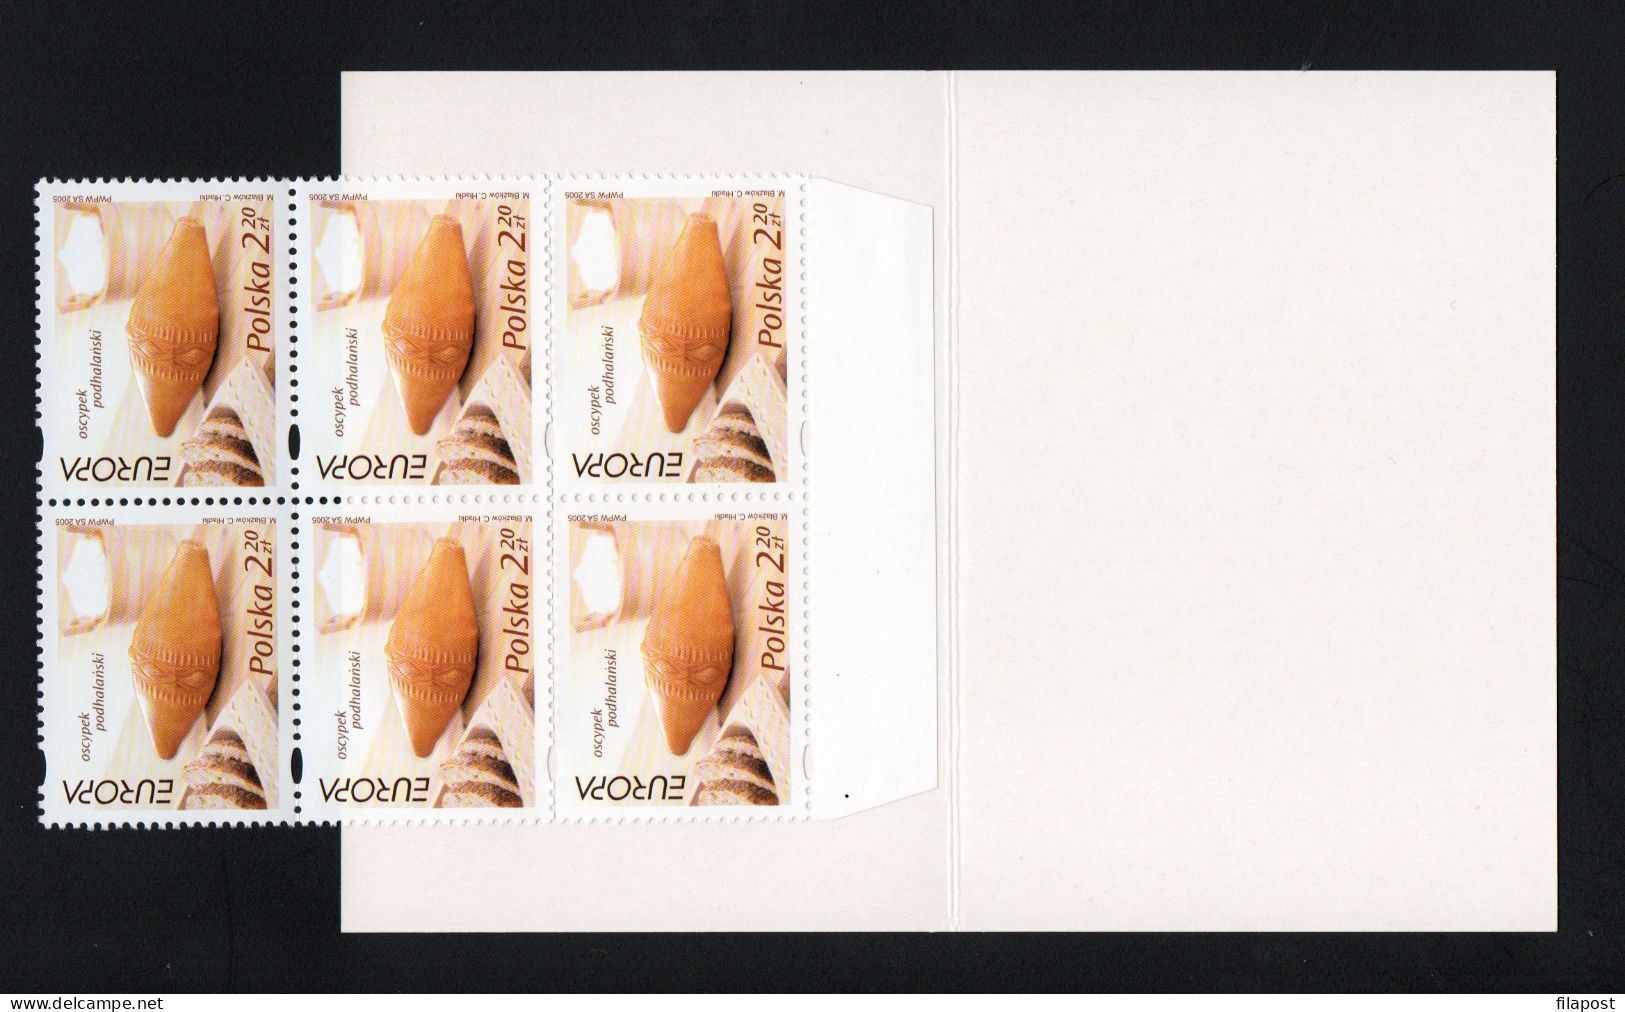 Poland 2005 Mi 4183 Europa - CEPT, Oscypek Cheese, Karpaty Mountain Traditional Food Booklet Set Of 6 Stamps MNH** - Libretti